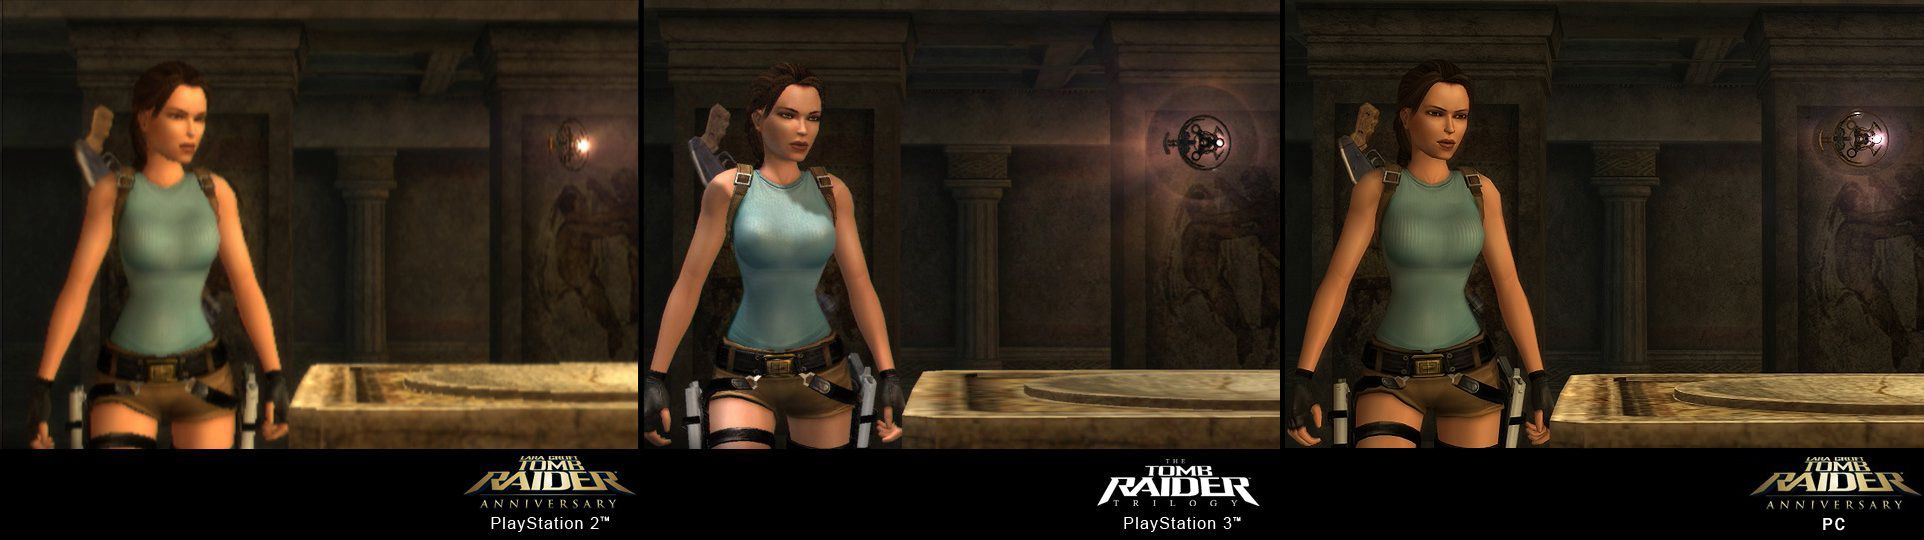 Tomb Raider Trilogy - Image 8